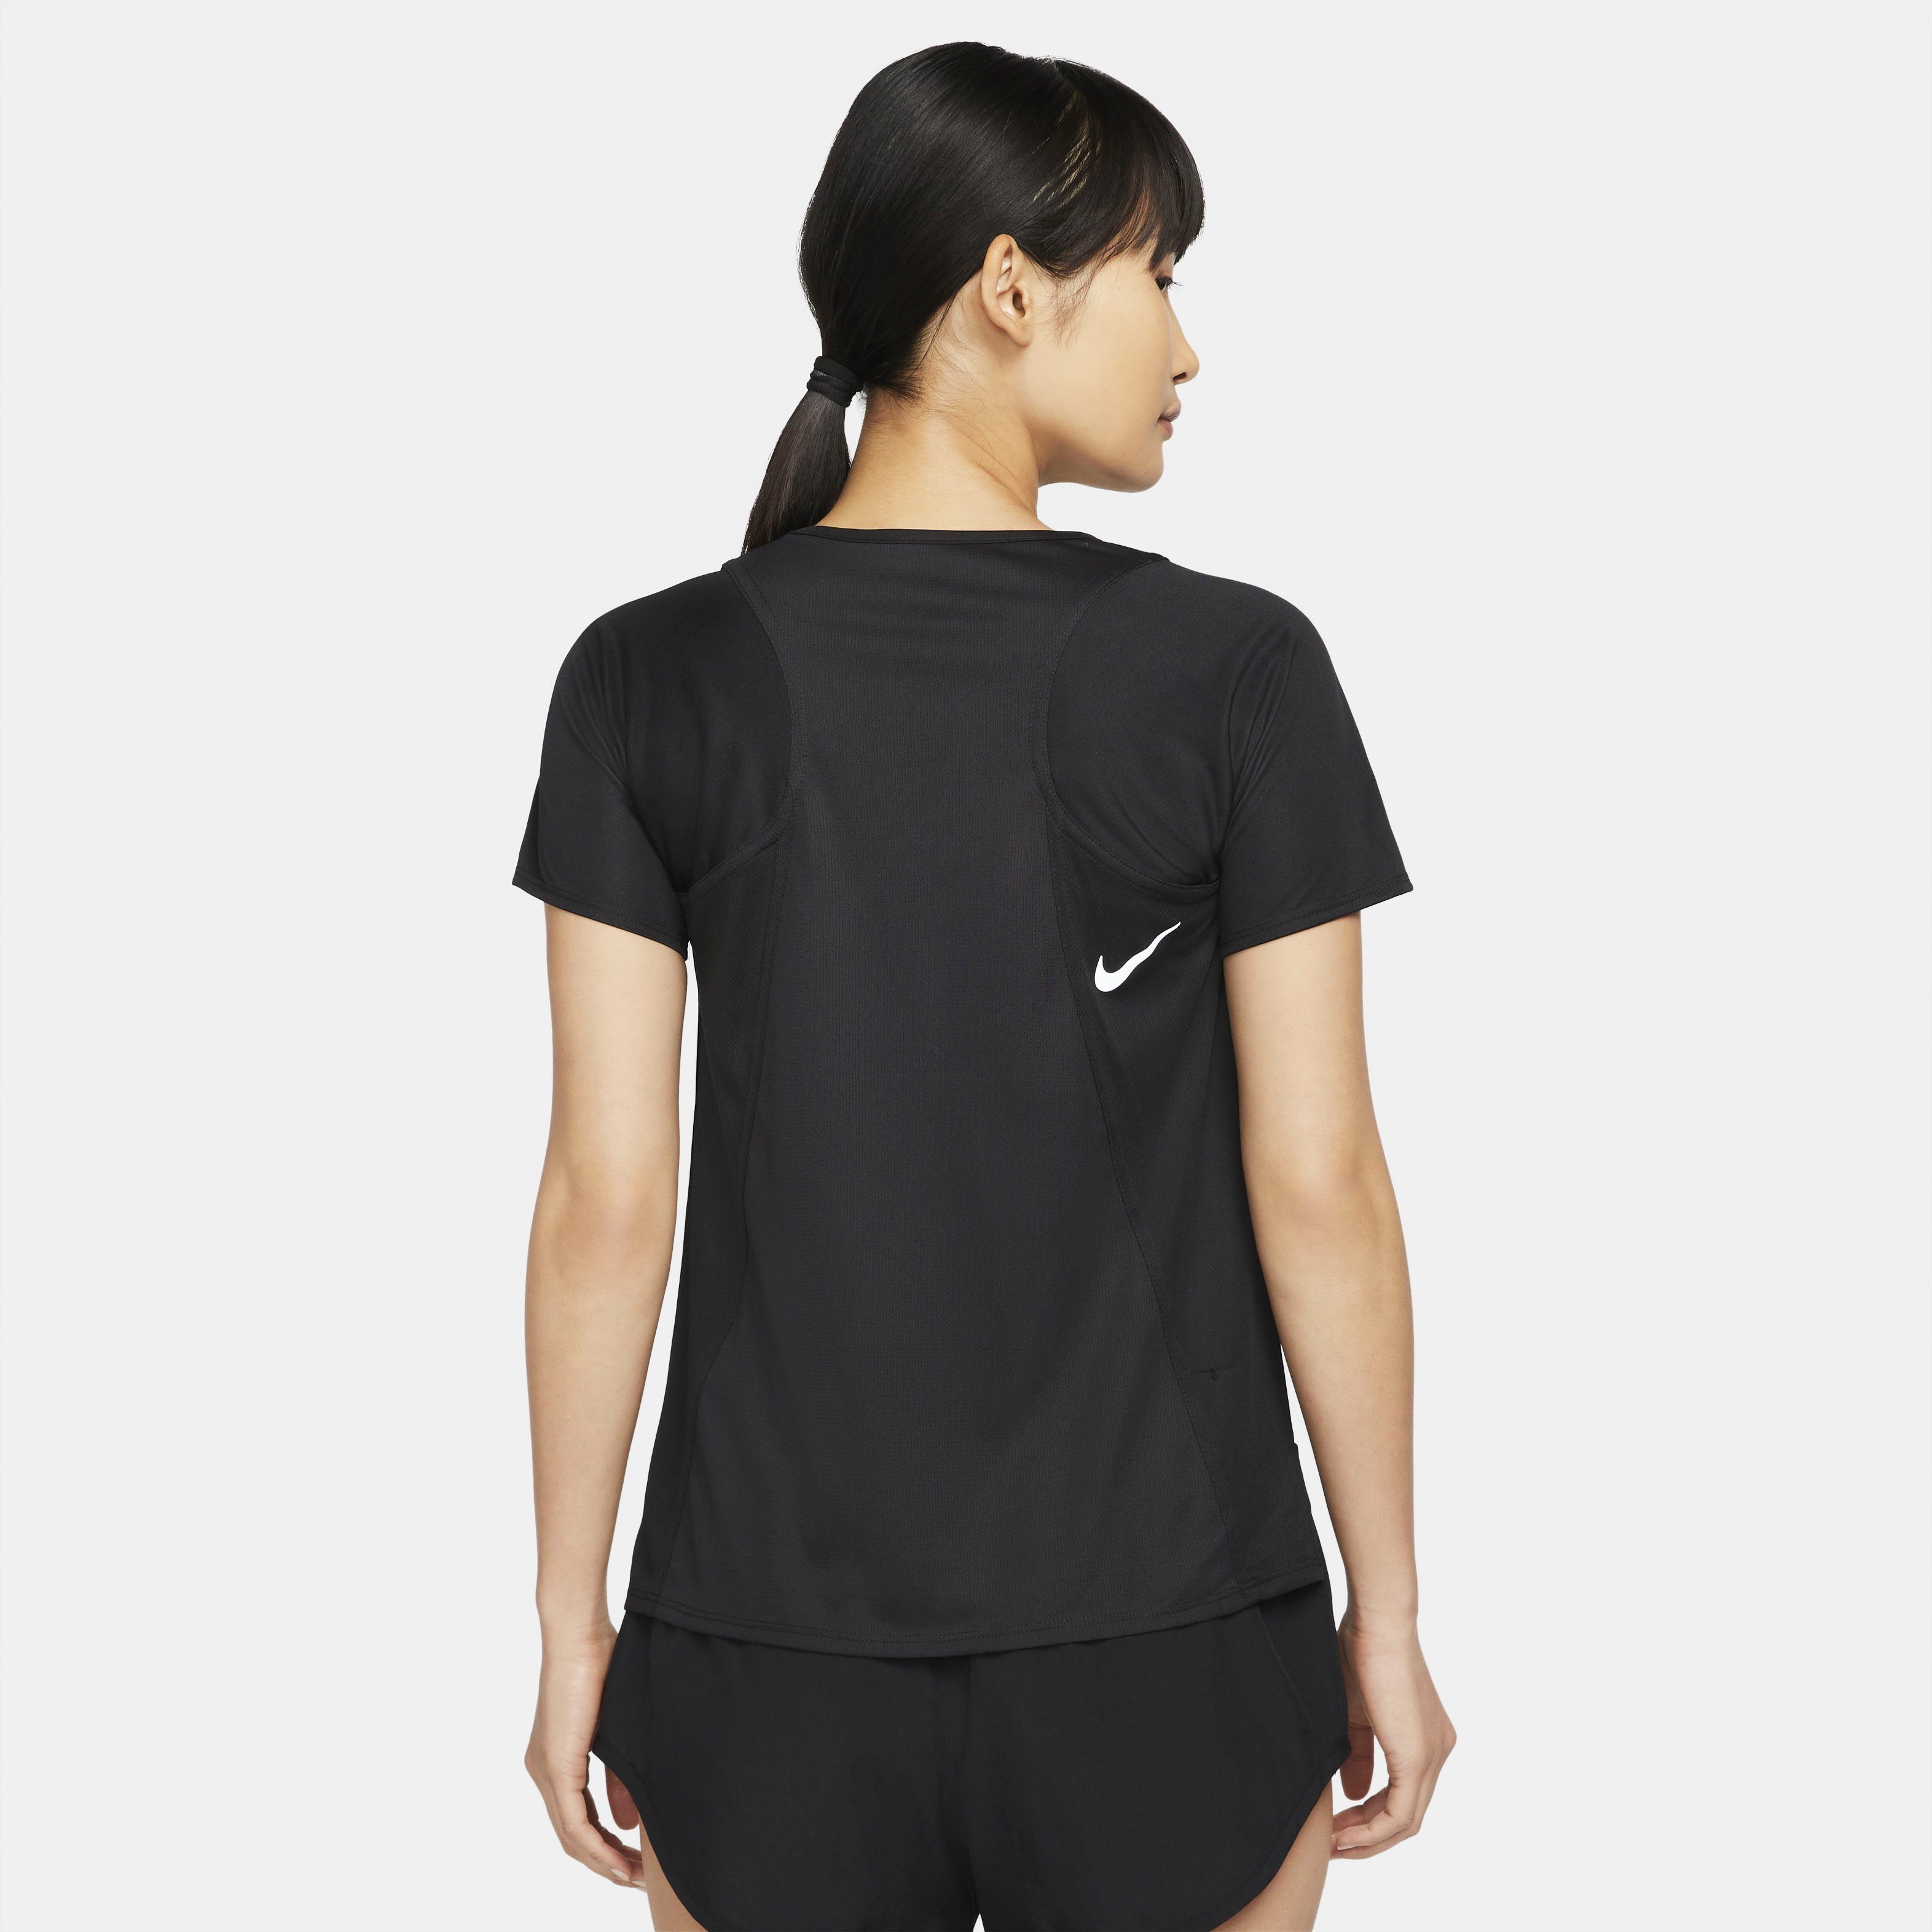 WOMEN'S Nike BLACK/REFLECTIVE TOP RUNNING SILV RACE DRI-FIT Laufshirt SHORT-SLEEVE